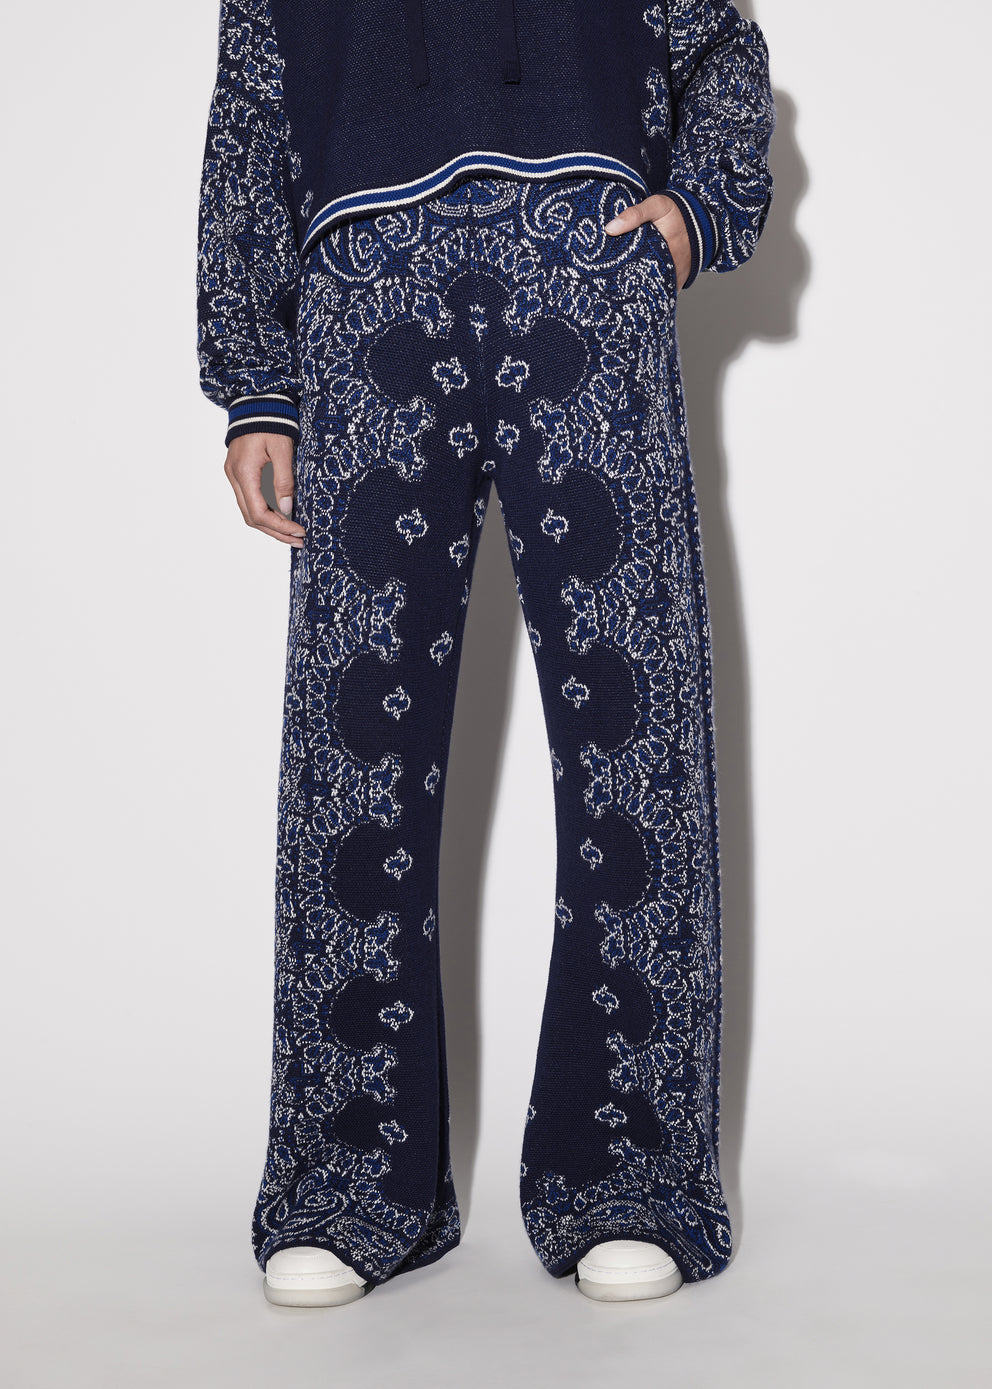 Pantalones Deportivos Amiri Bandana Knit Mujer Azules | 6357YOAPV